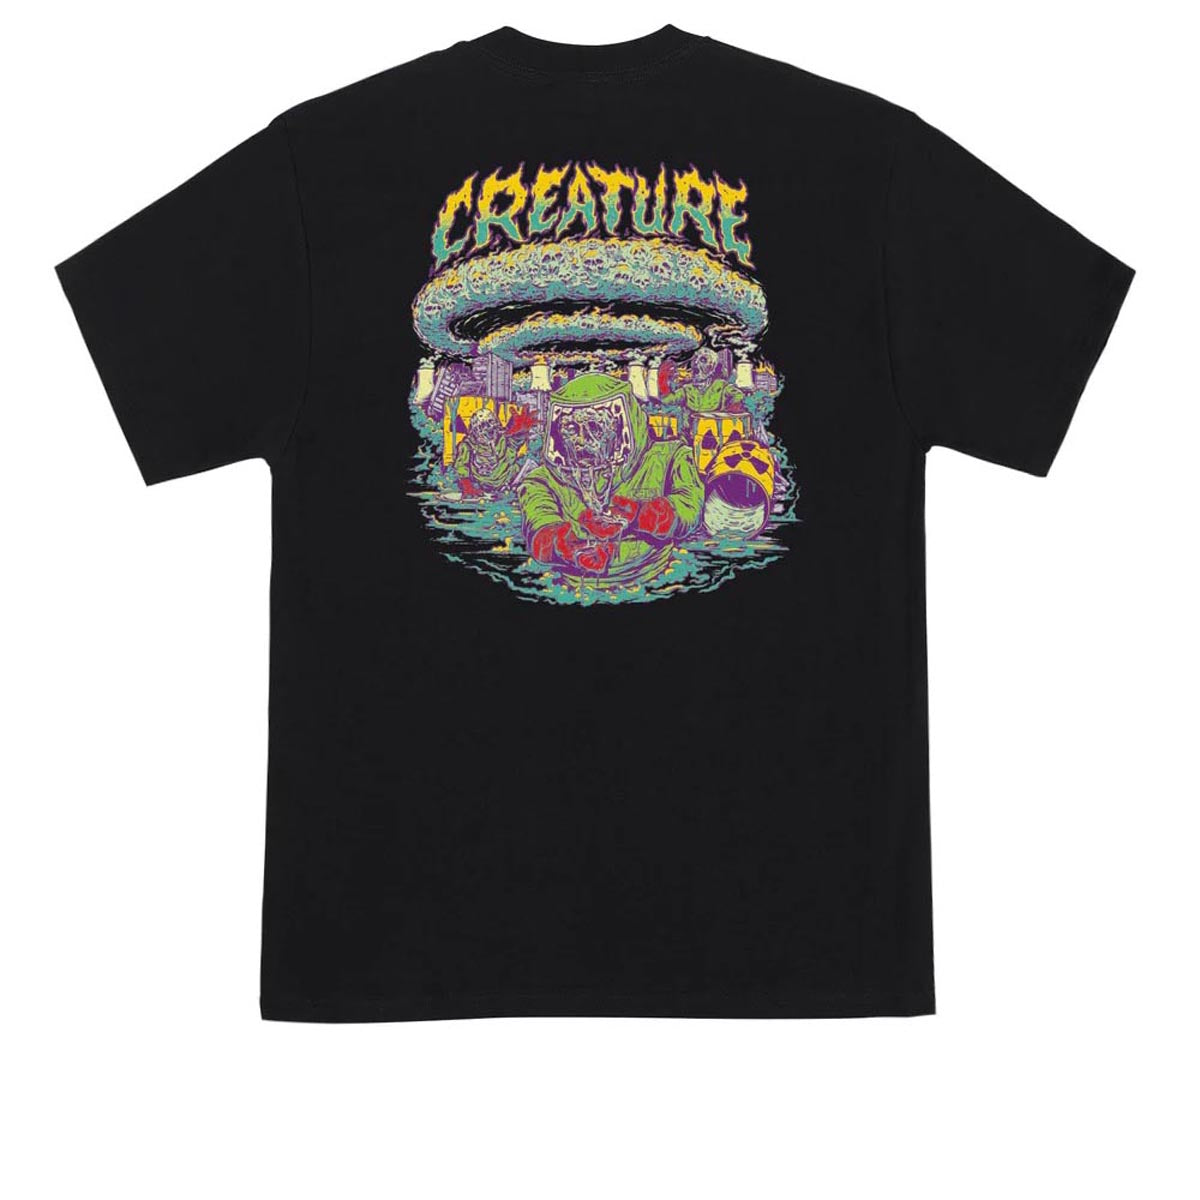 Creature Doomsday T-Shirt - Black image 1